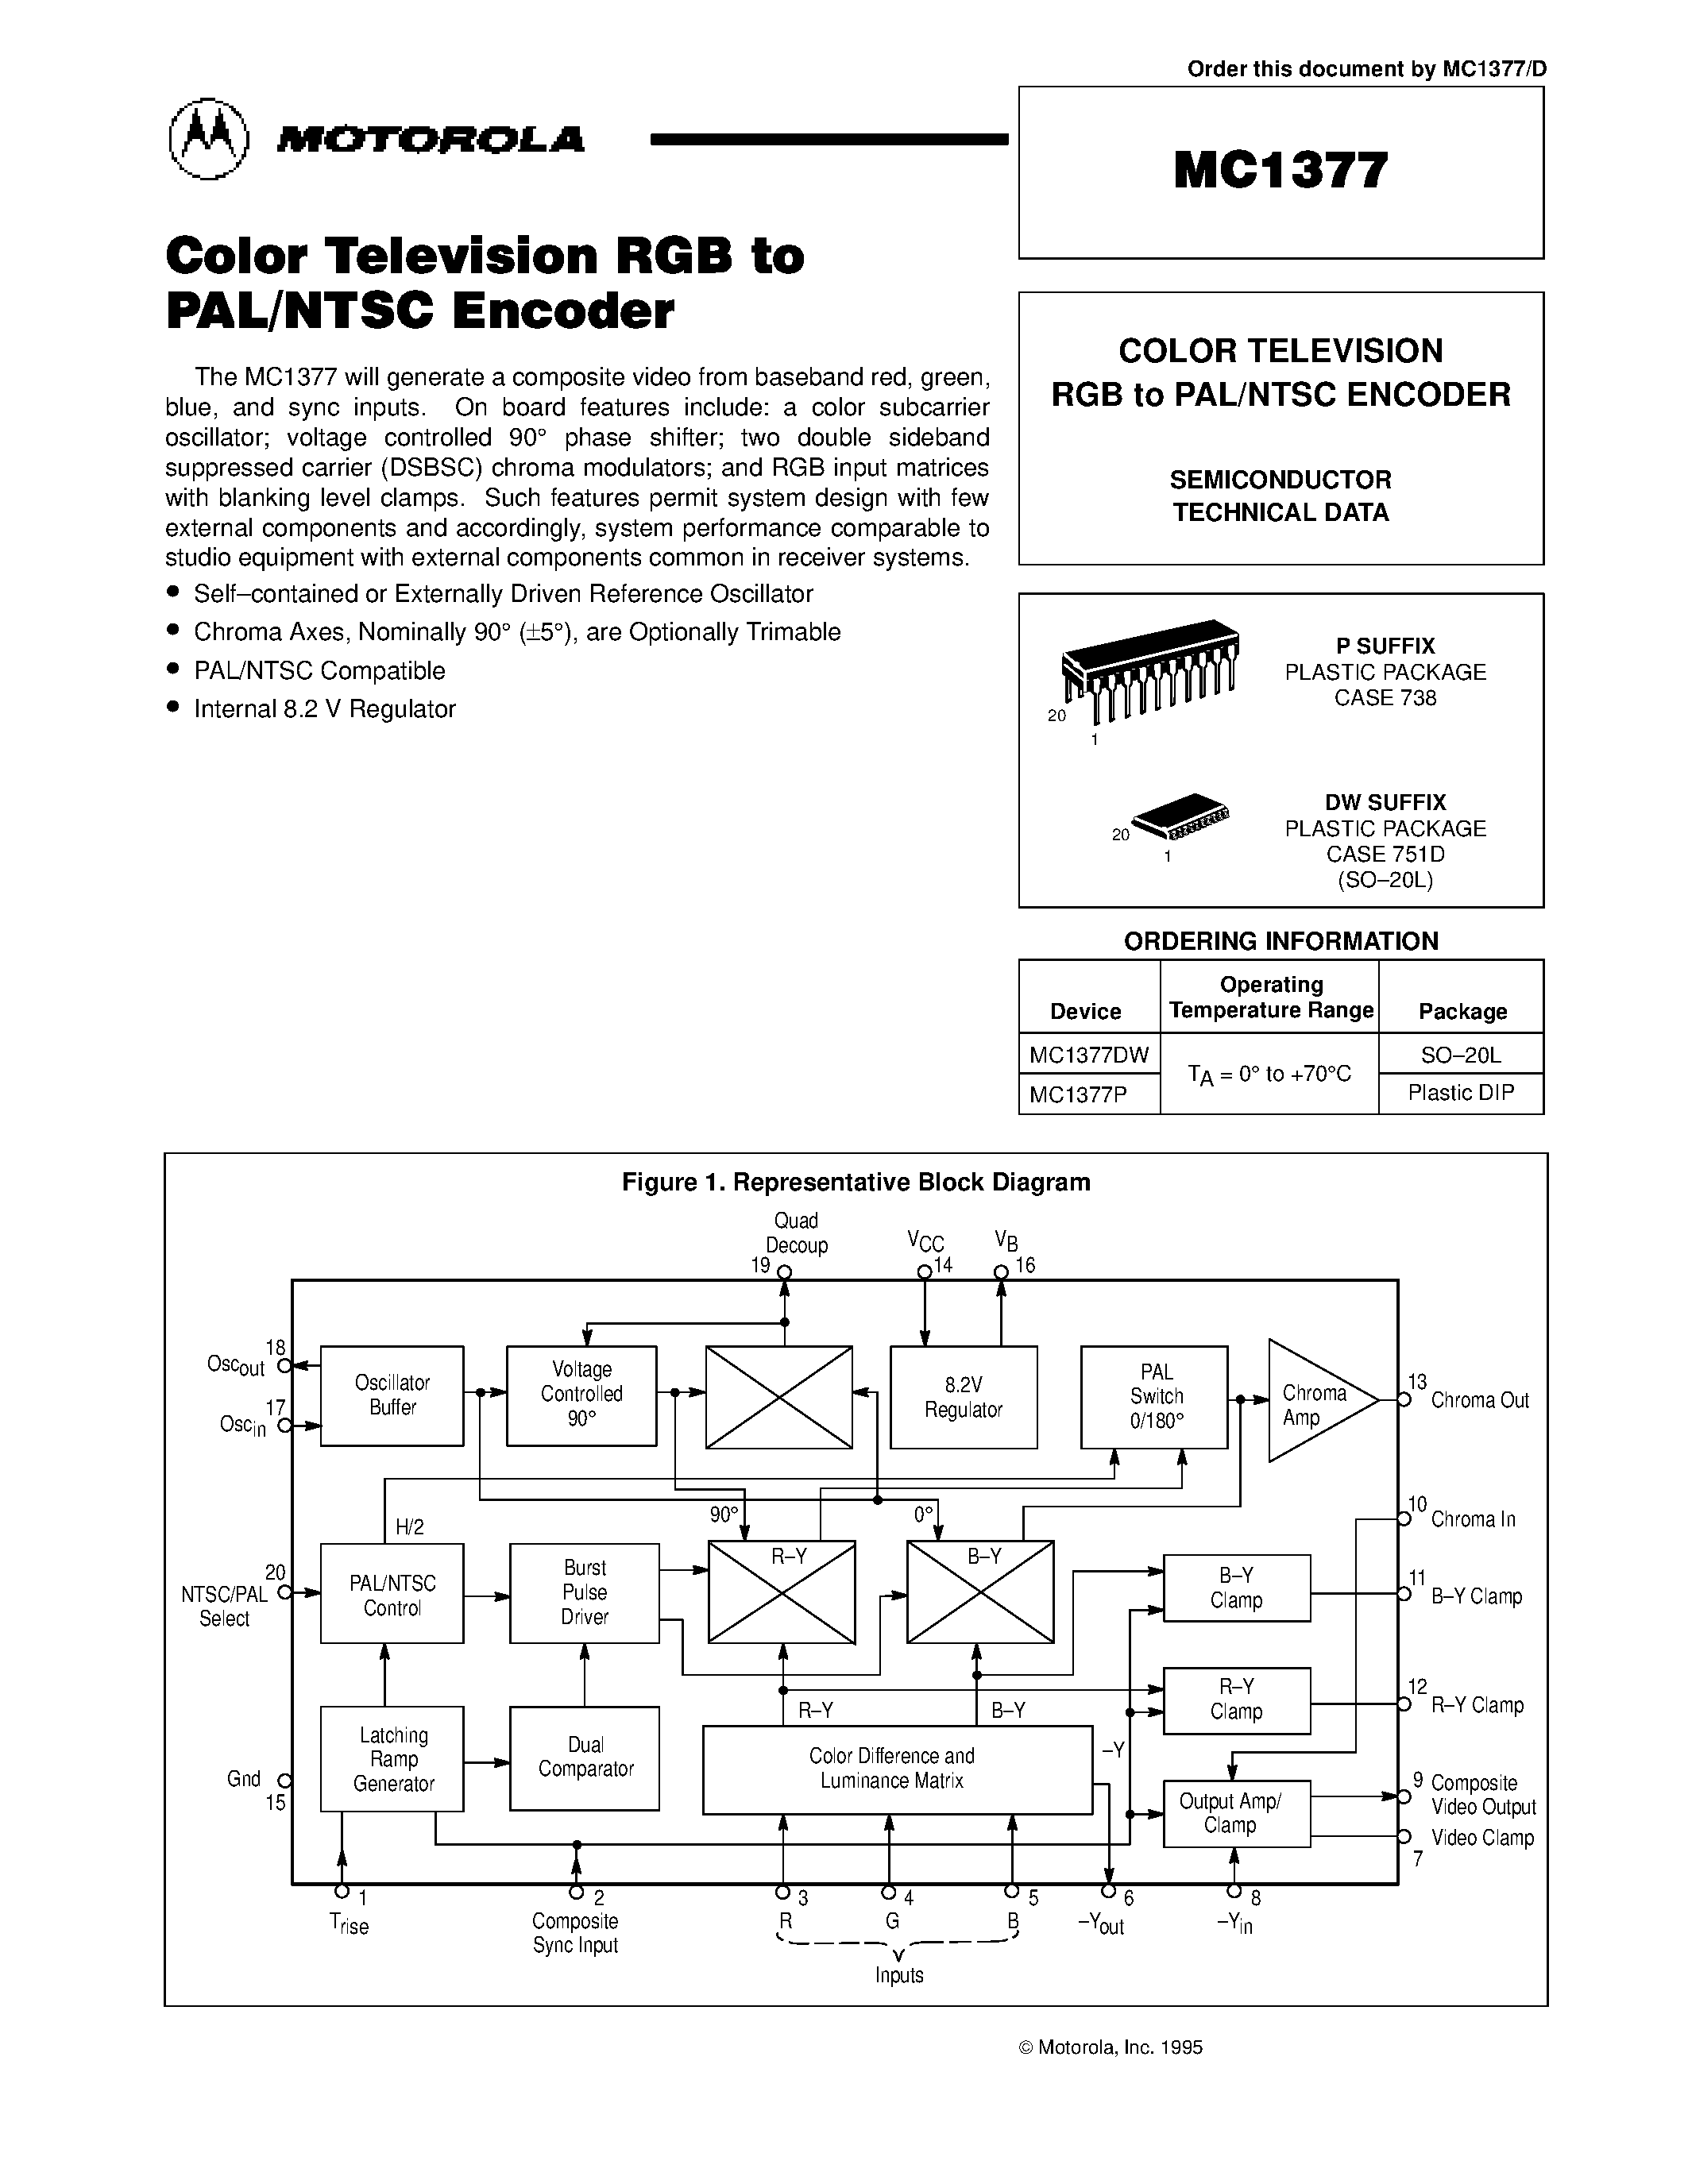 Даташит MC1377DW - COLOR TELEVISION RGB to PAL/NTSC ENCODER страница 1